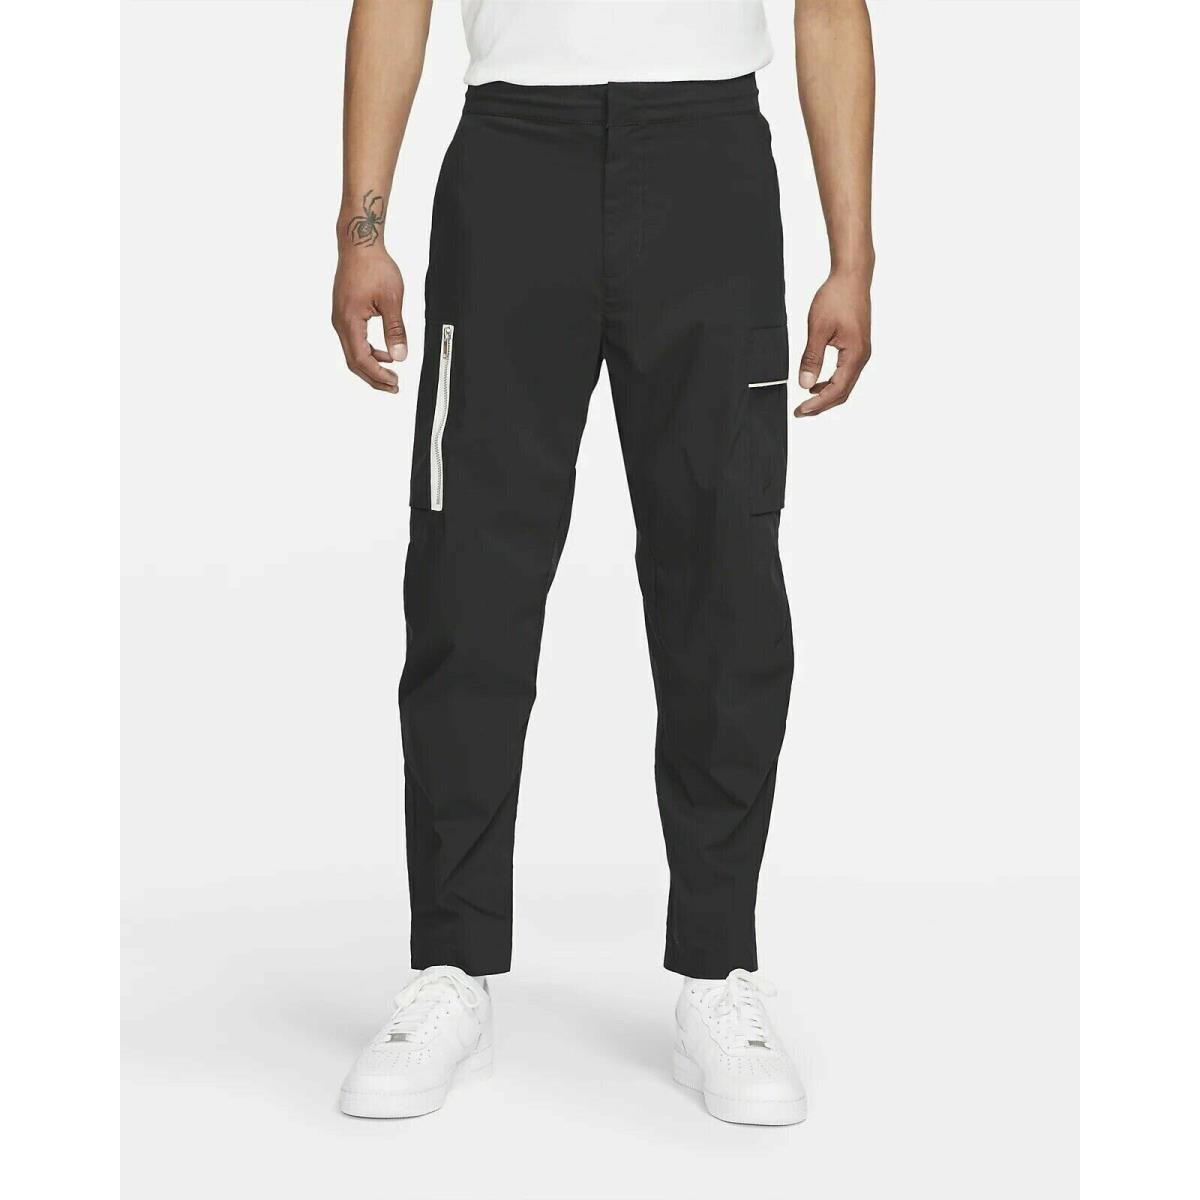 Nike Nsw Essential Style Woven Utility Pants Size 32 Black White DD7034 010